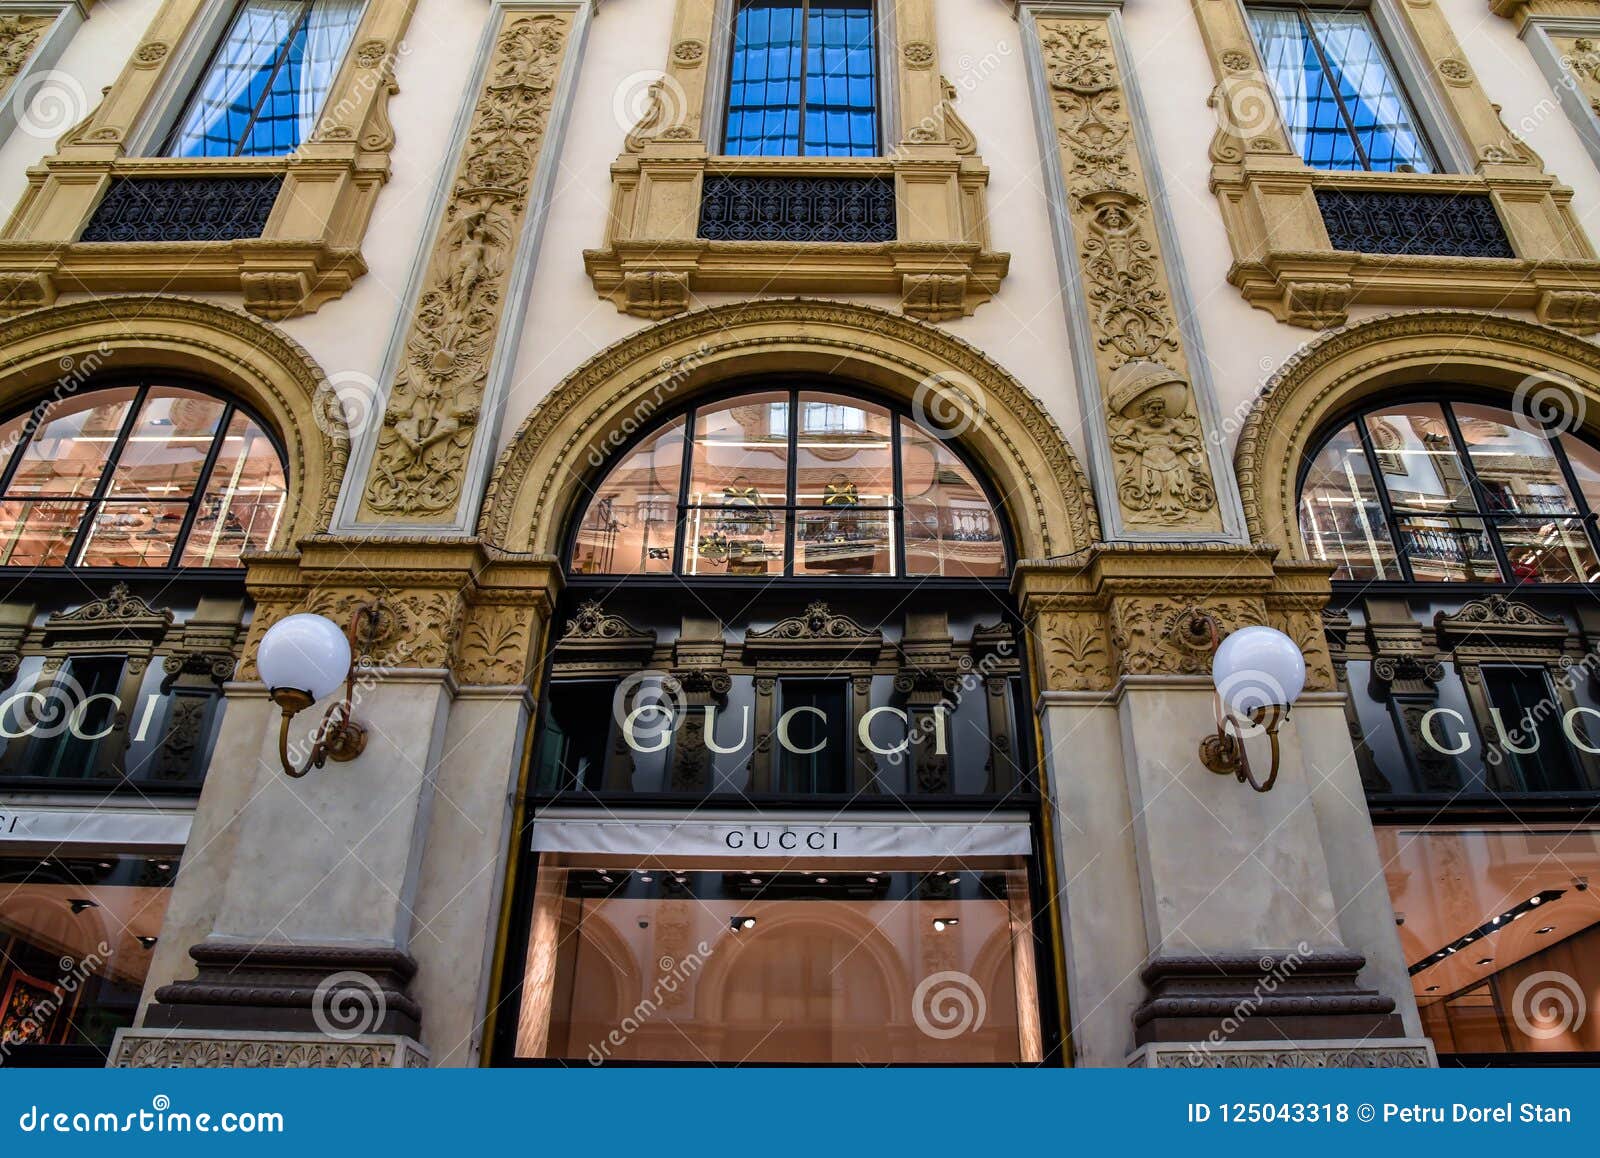 Shop Gucci Milano In Galleria Vittorio Emanuele II Italy Editorial Stock Photo - Image of urban ...